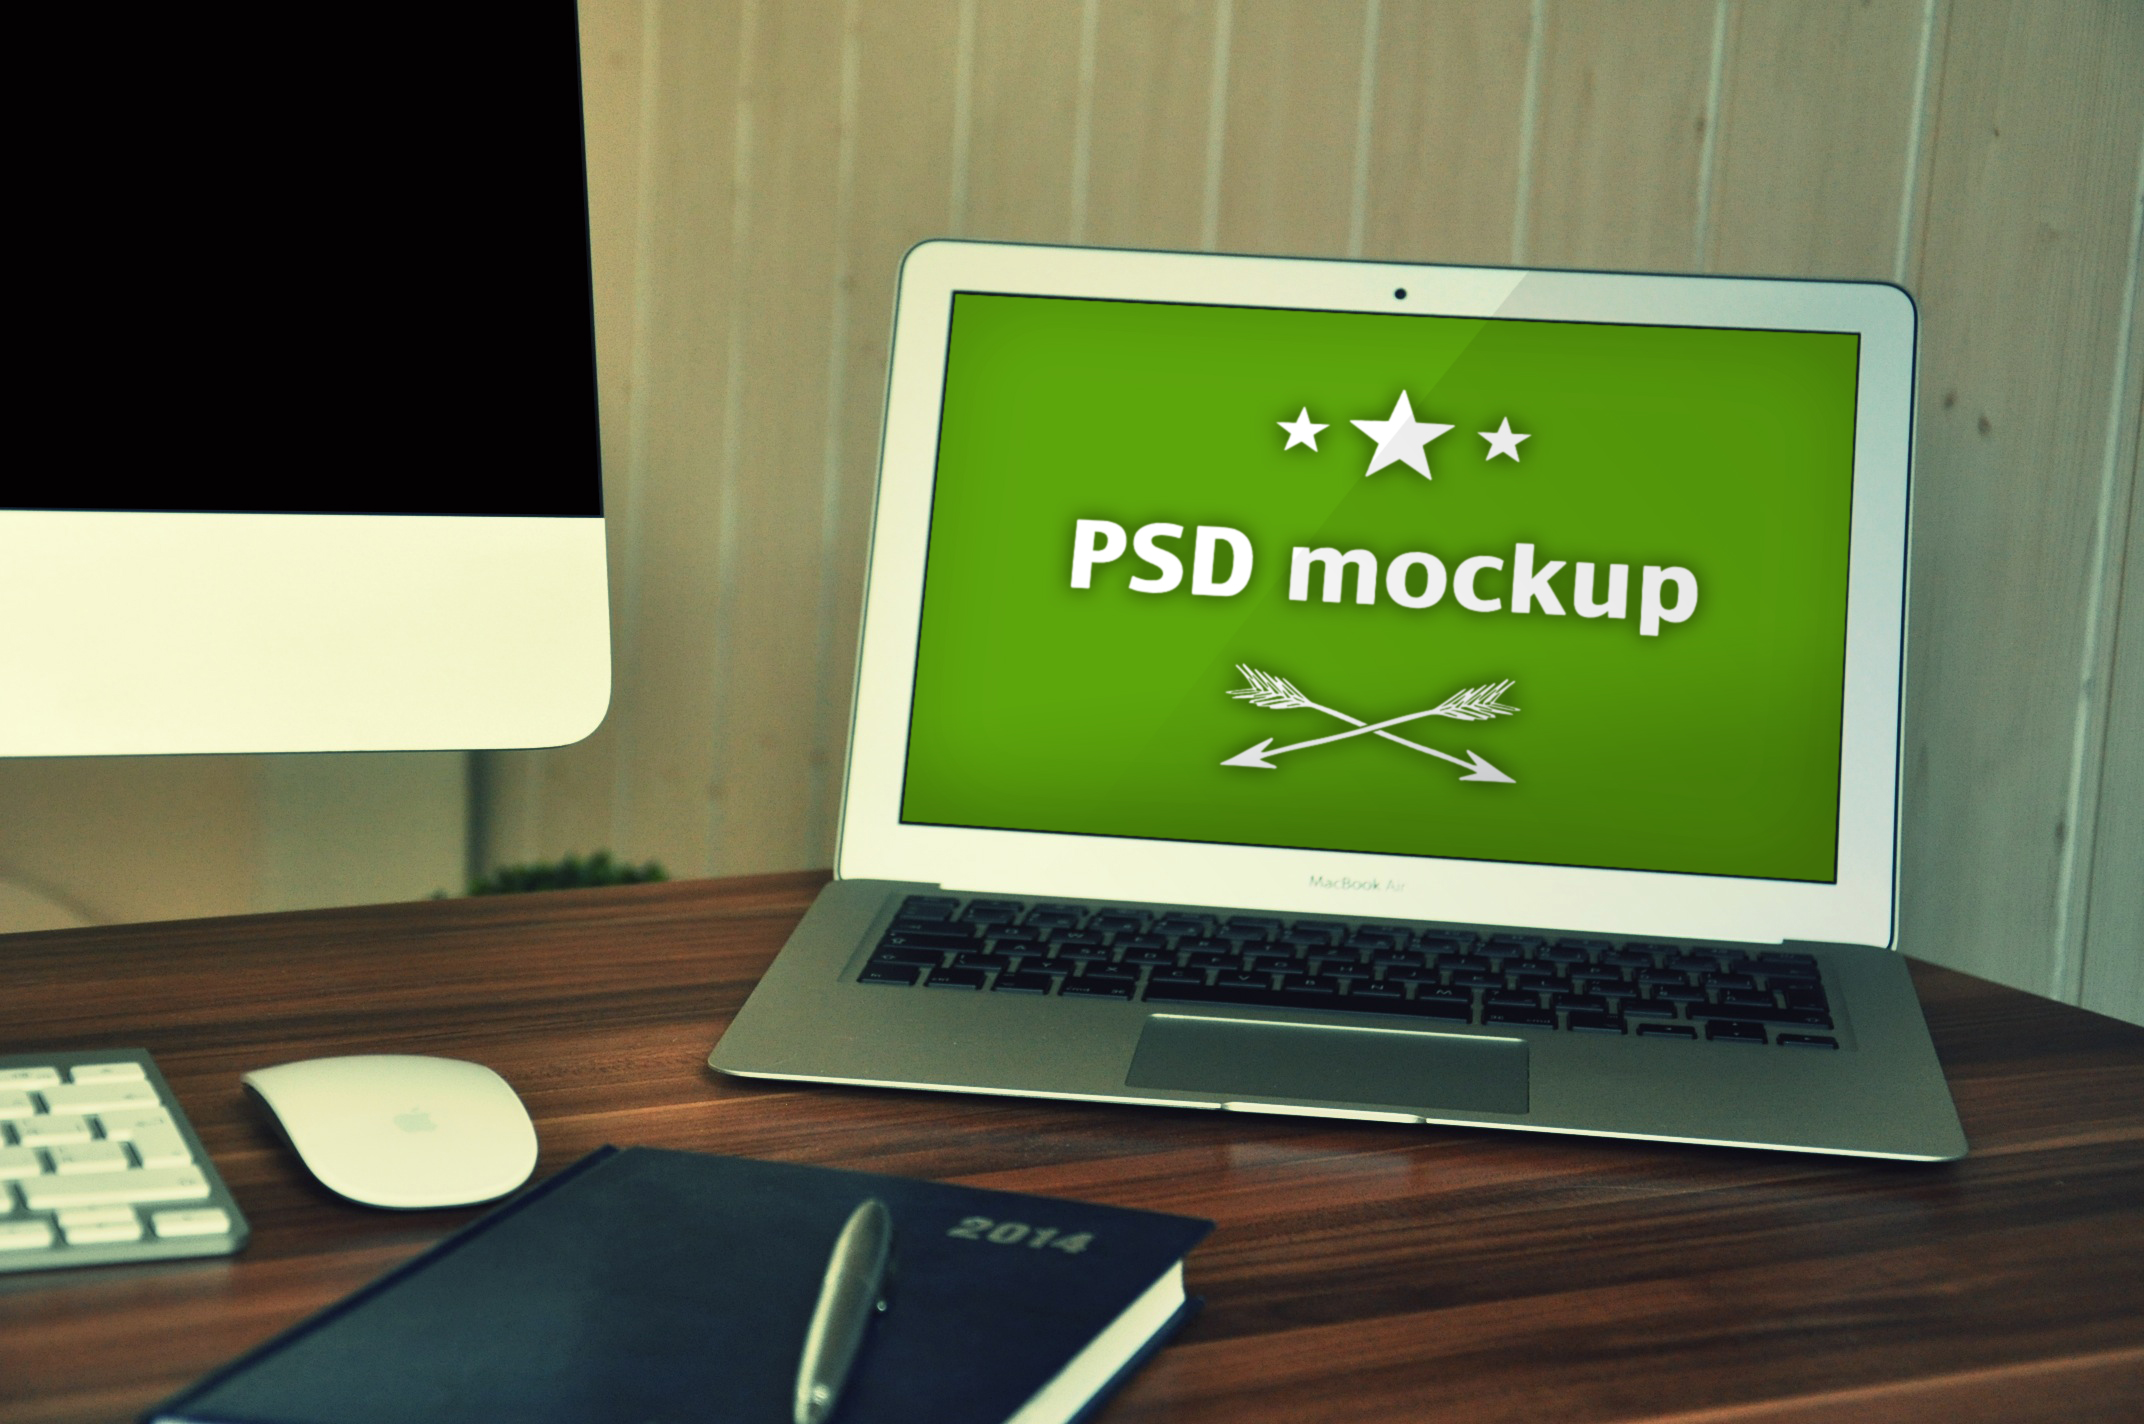 Download Psd Mockup - Macbook air #1 ~ Product Mockups on Creative ... PSD Mockup Templates